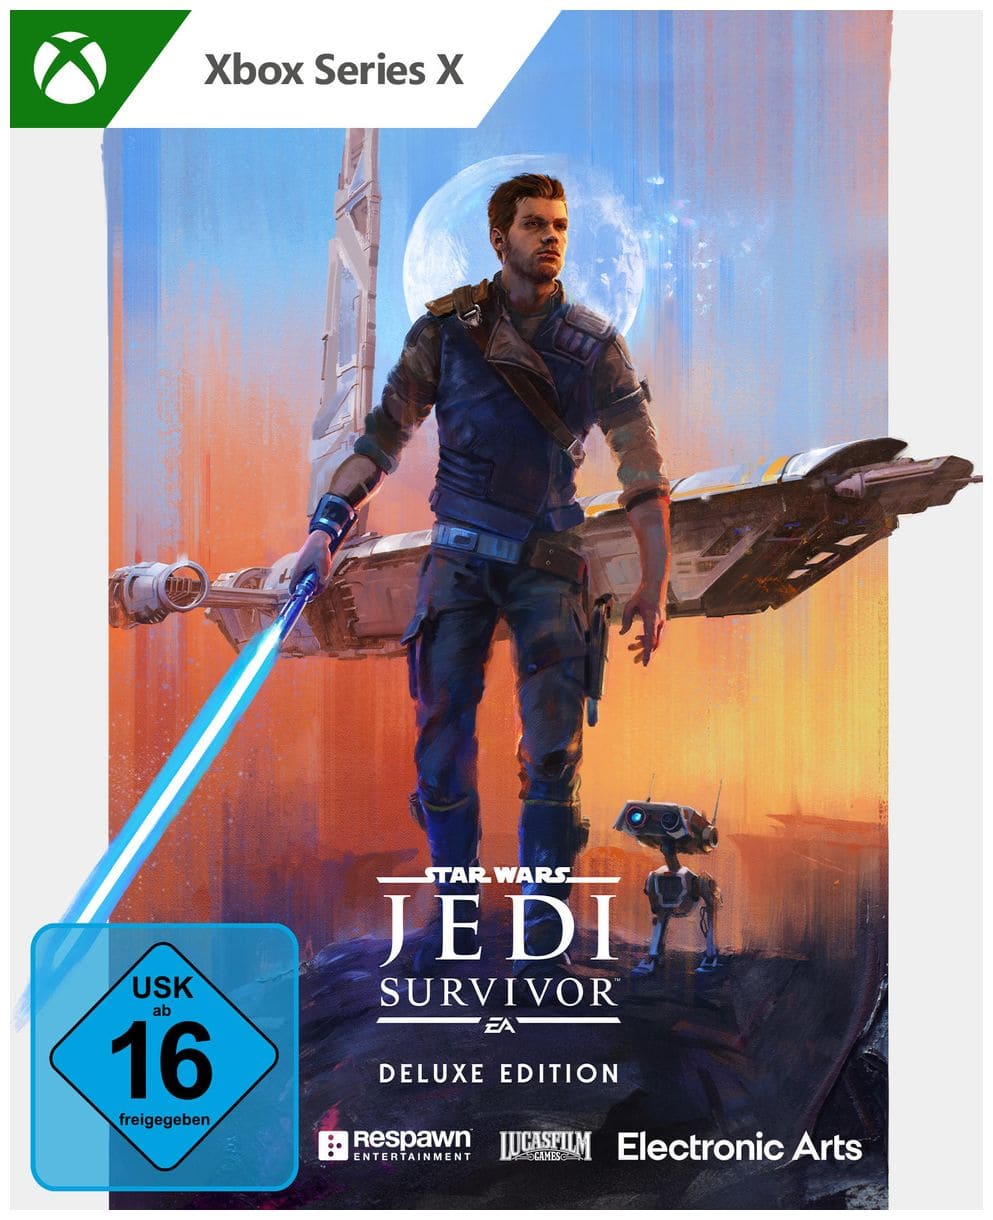 Star Wars Jedi: Survivor Deluxe Edition (Xbox Series X) 